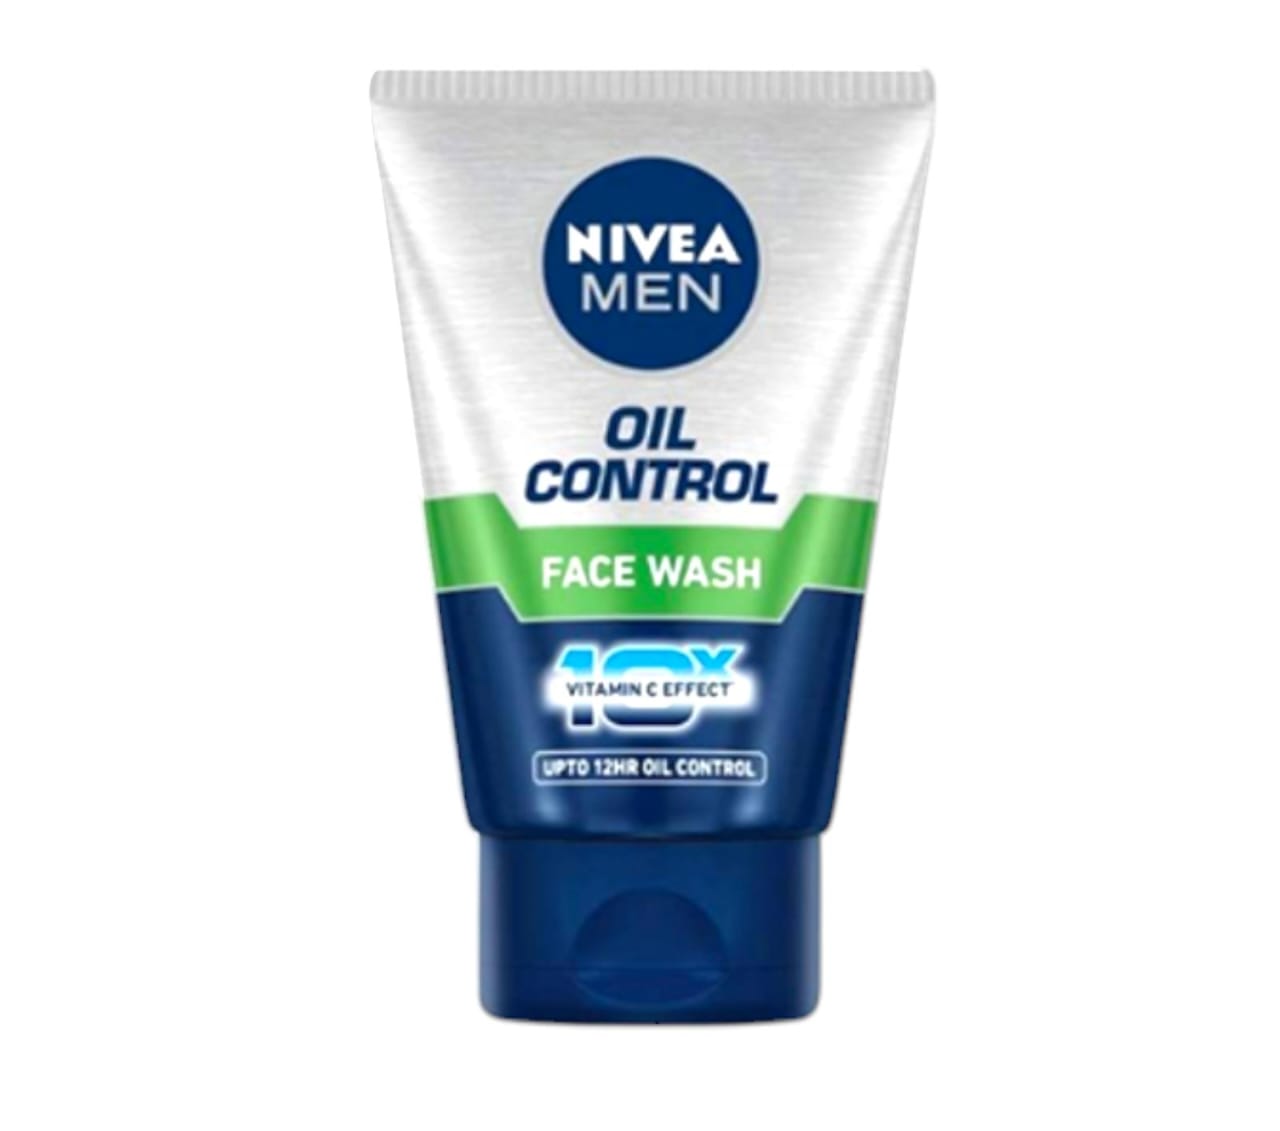 Nivea Oil Control Face wash